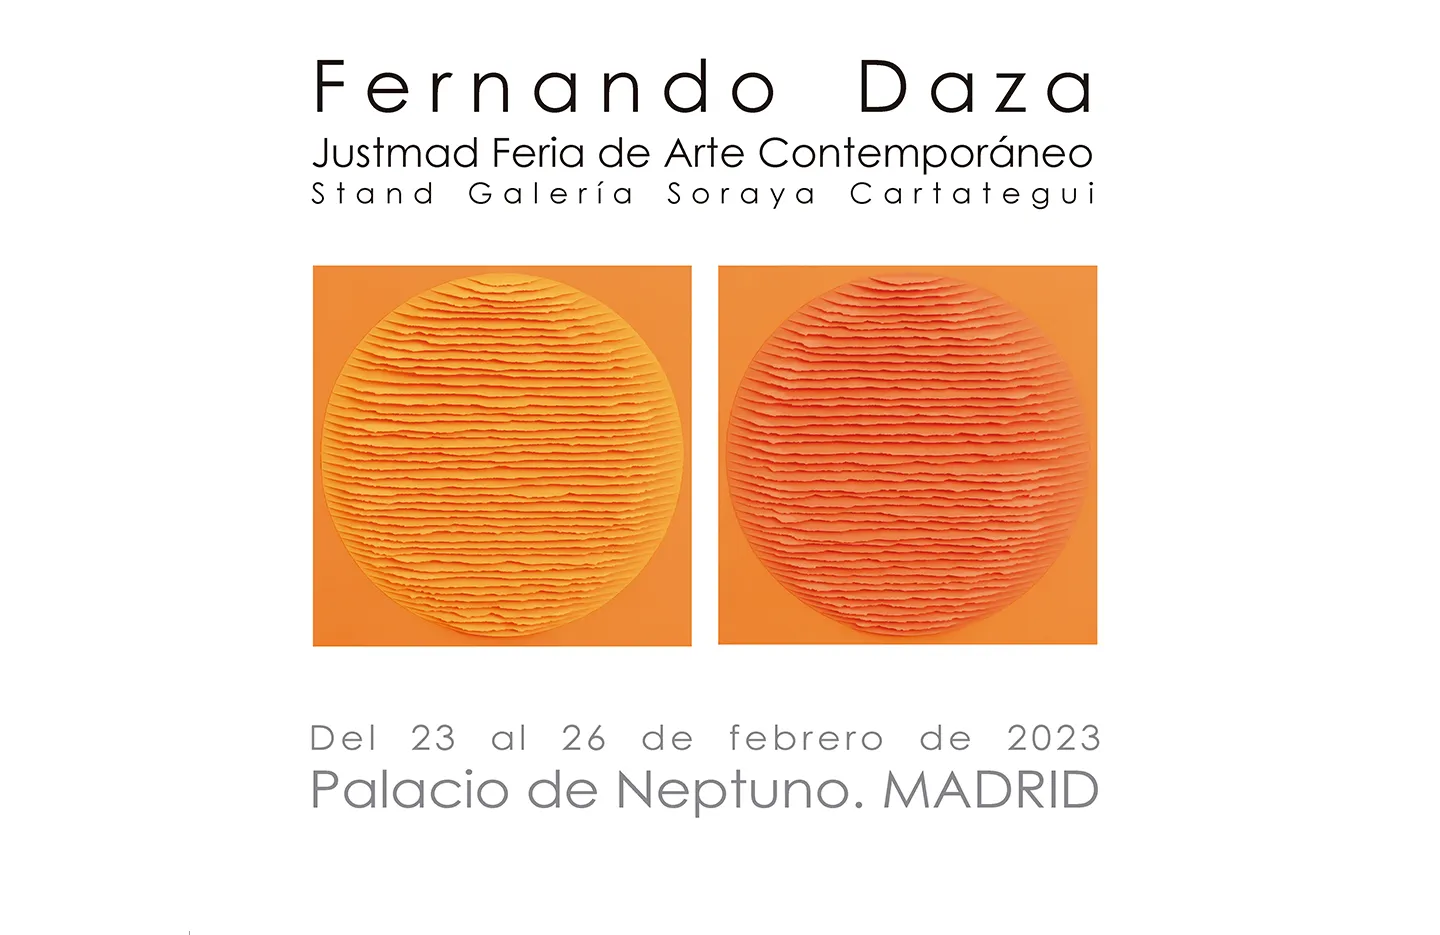 Fernando Daza Visual Artist - evento 2023 justmad